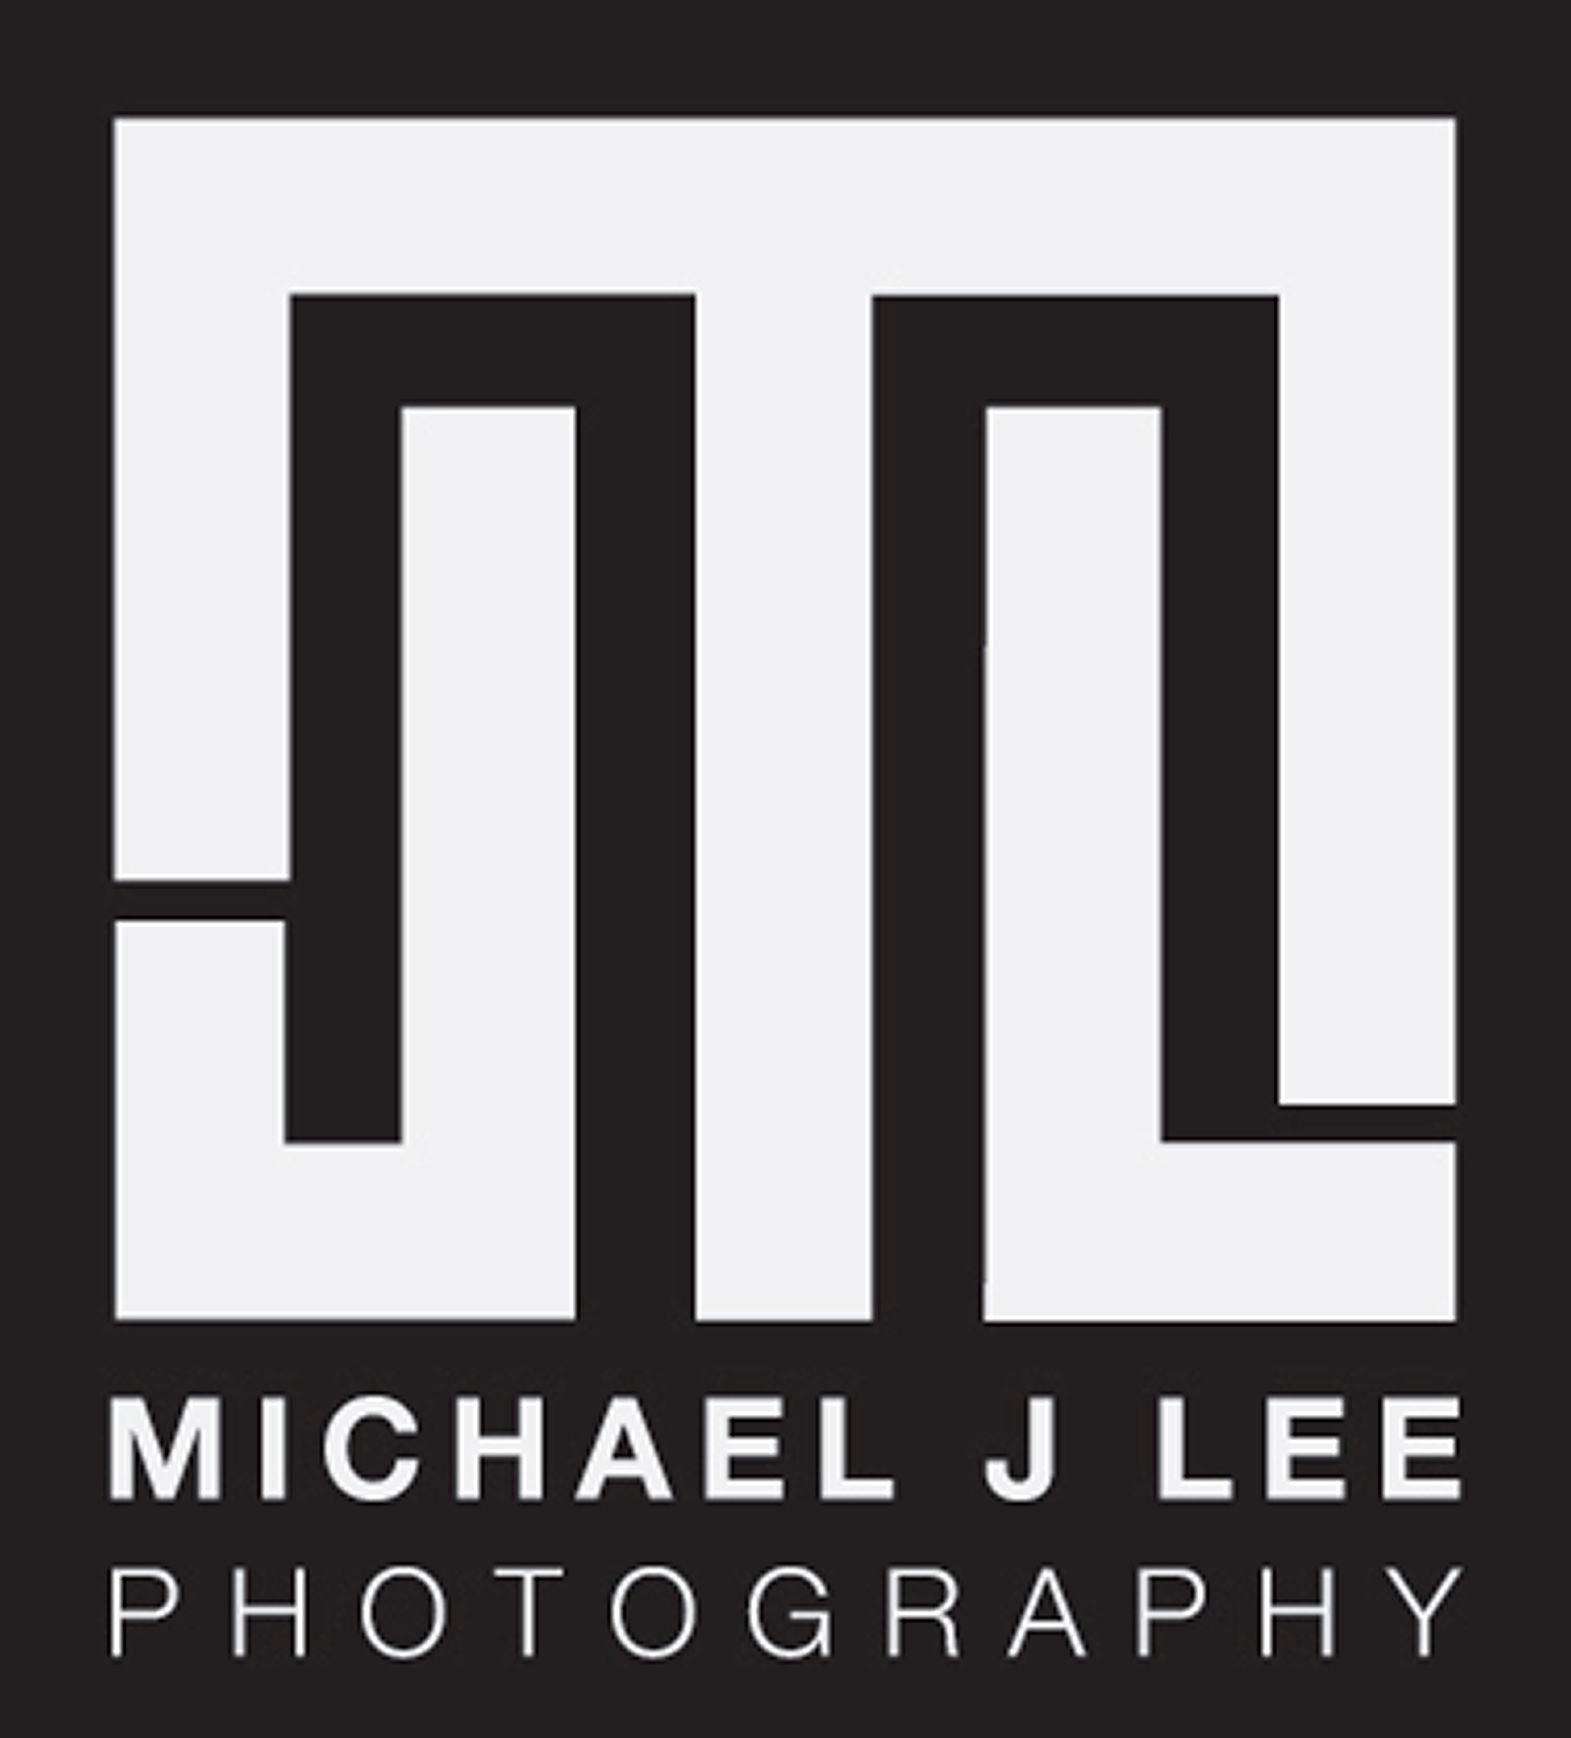 Michael J. Lee Photography